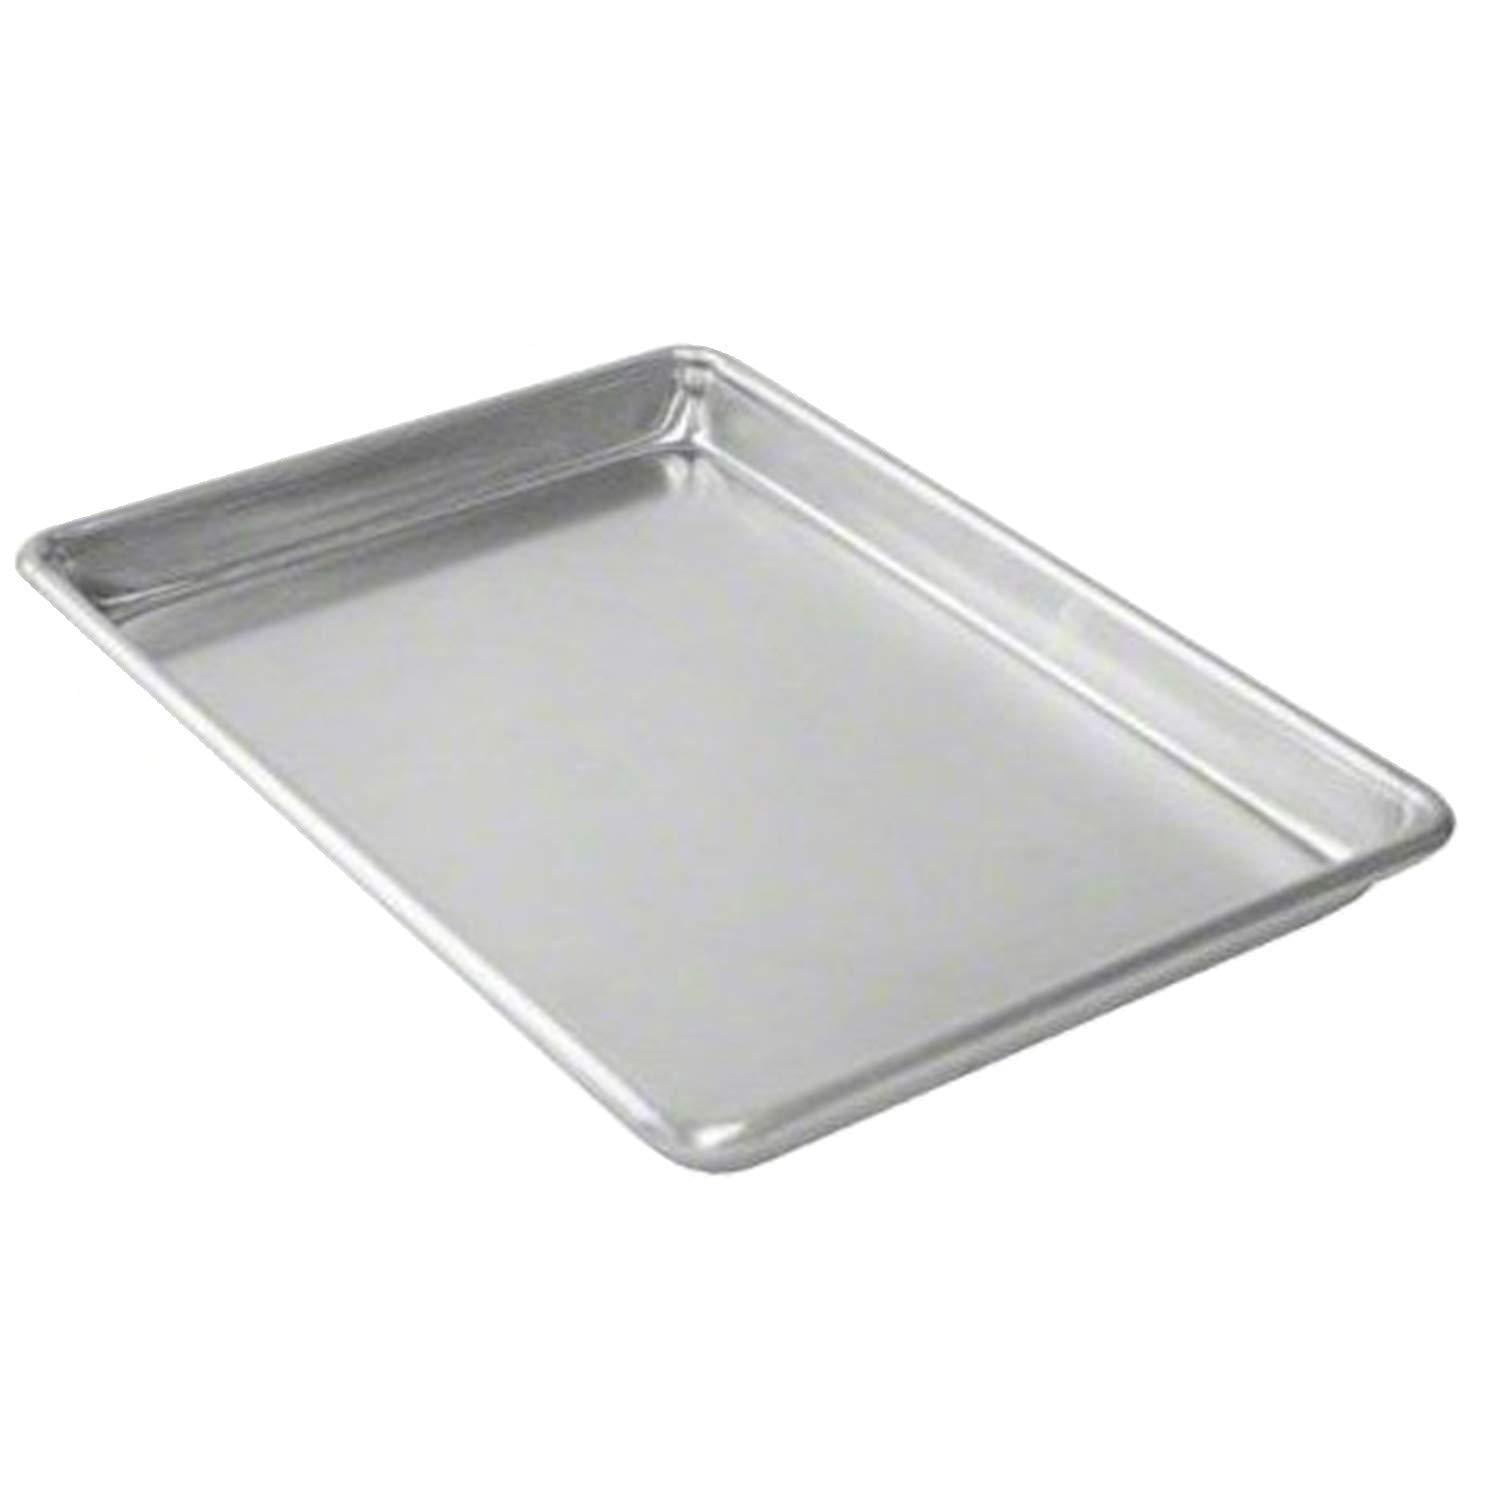 HTYSUPPLY Aluminum Sheet Pan (Set of 12), Baking Pans, Full Size